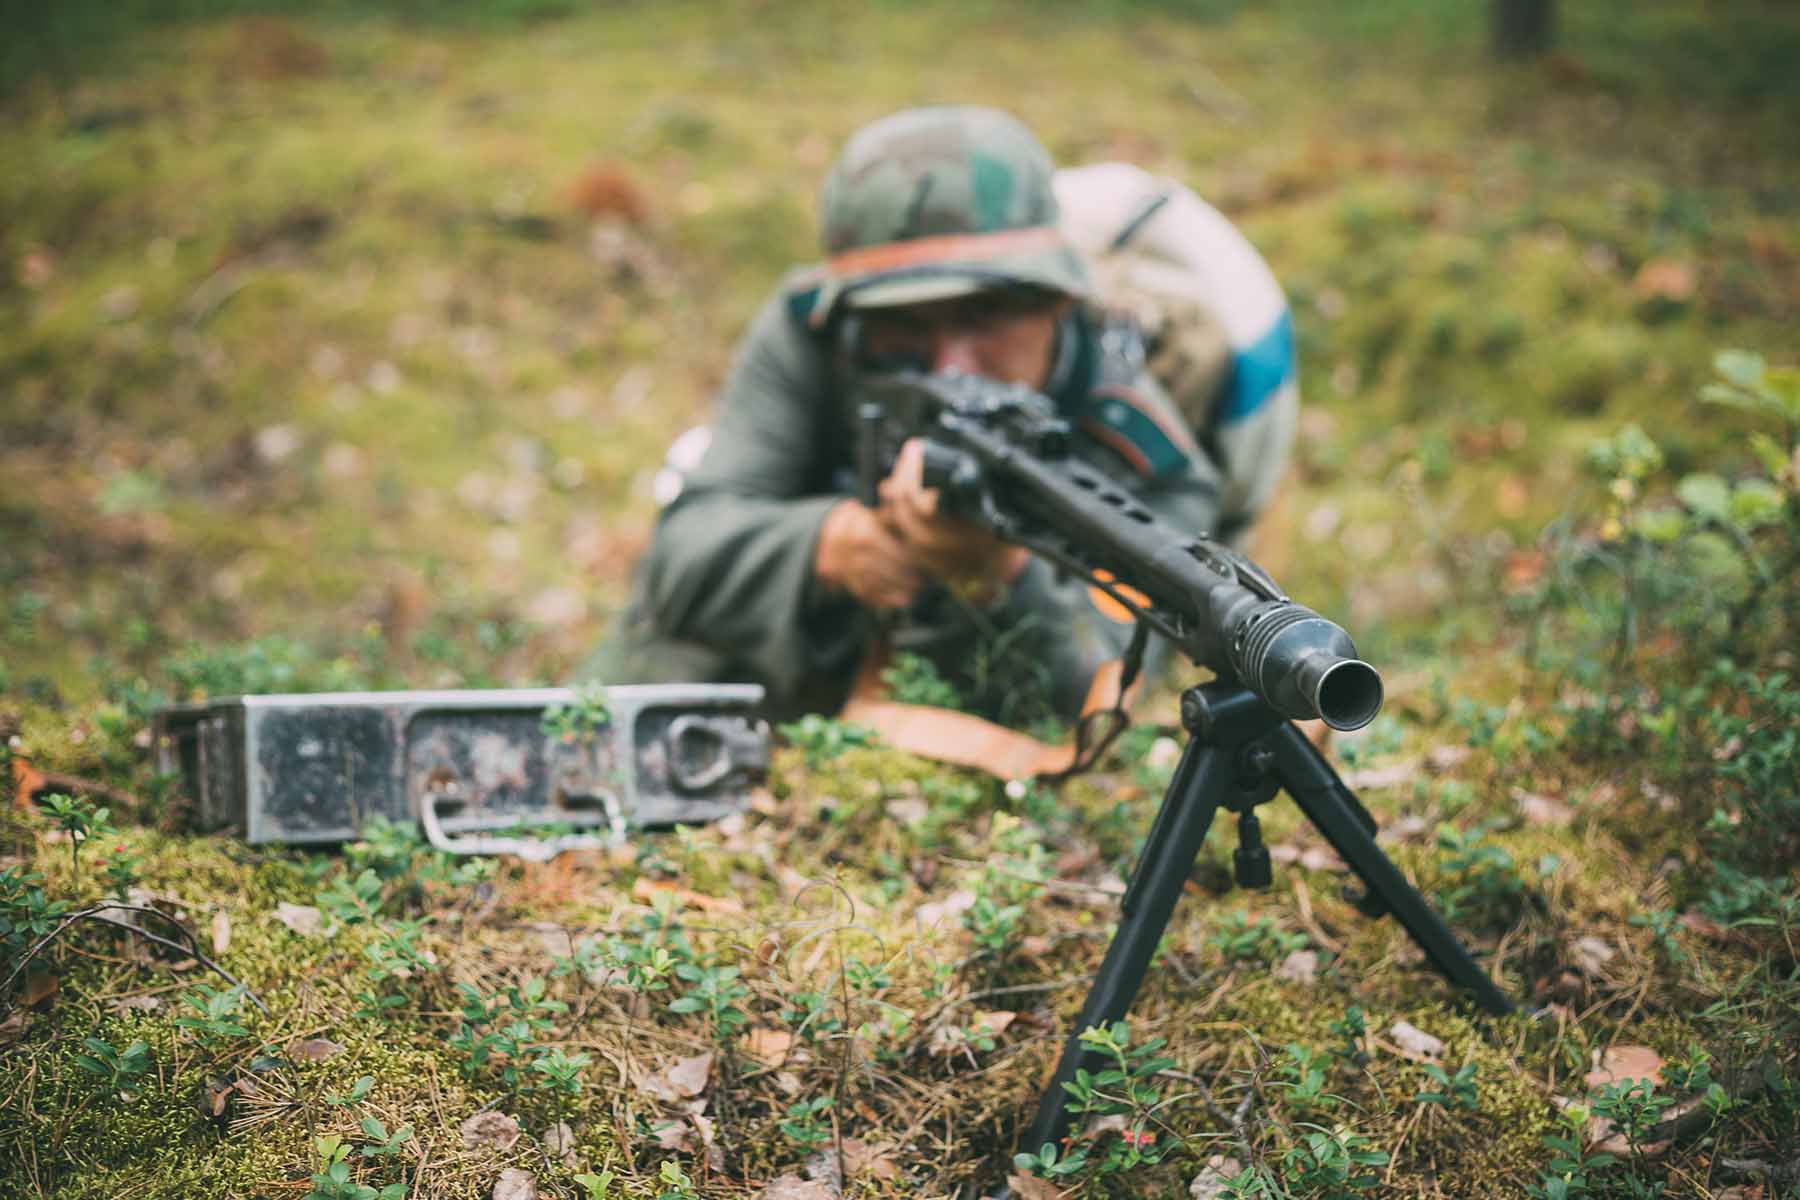 A soldier on the ground aiming a machine gun on top of a gun tripod.